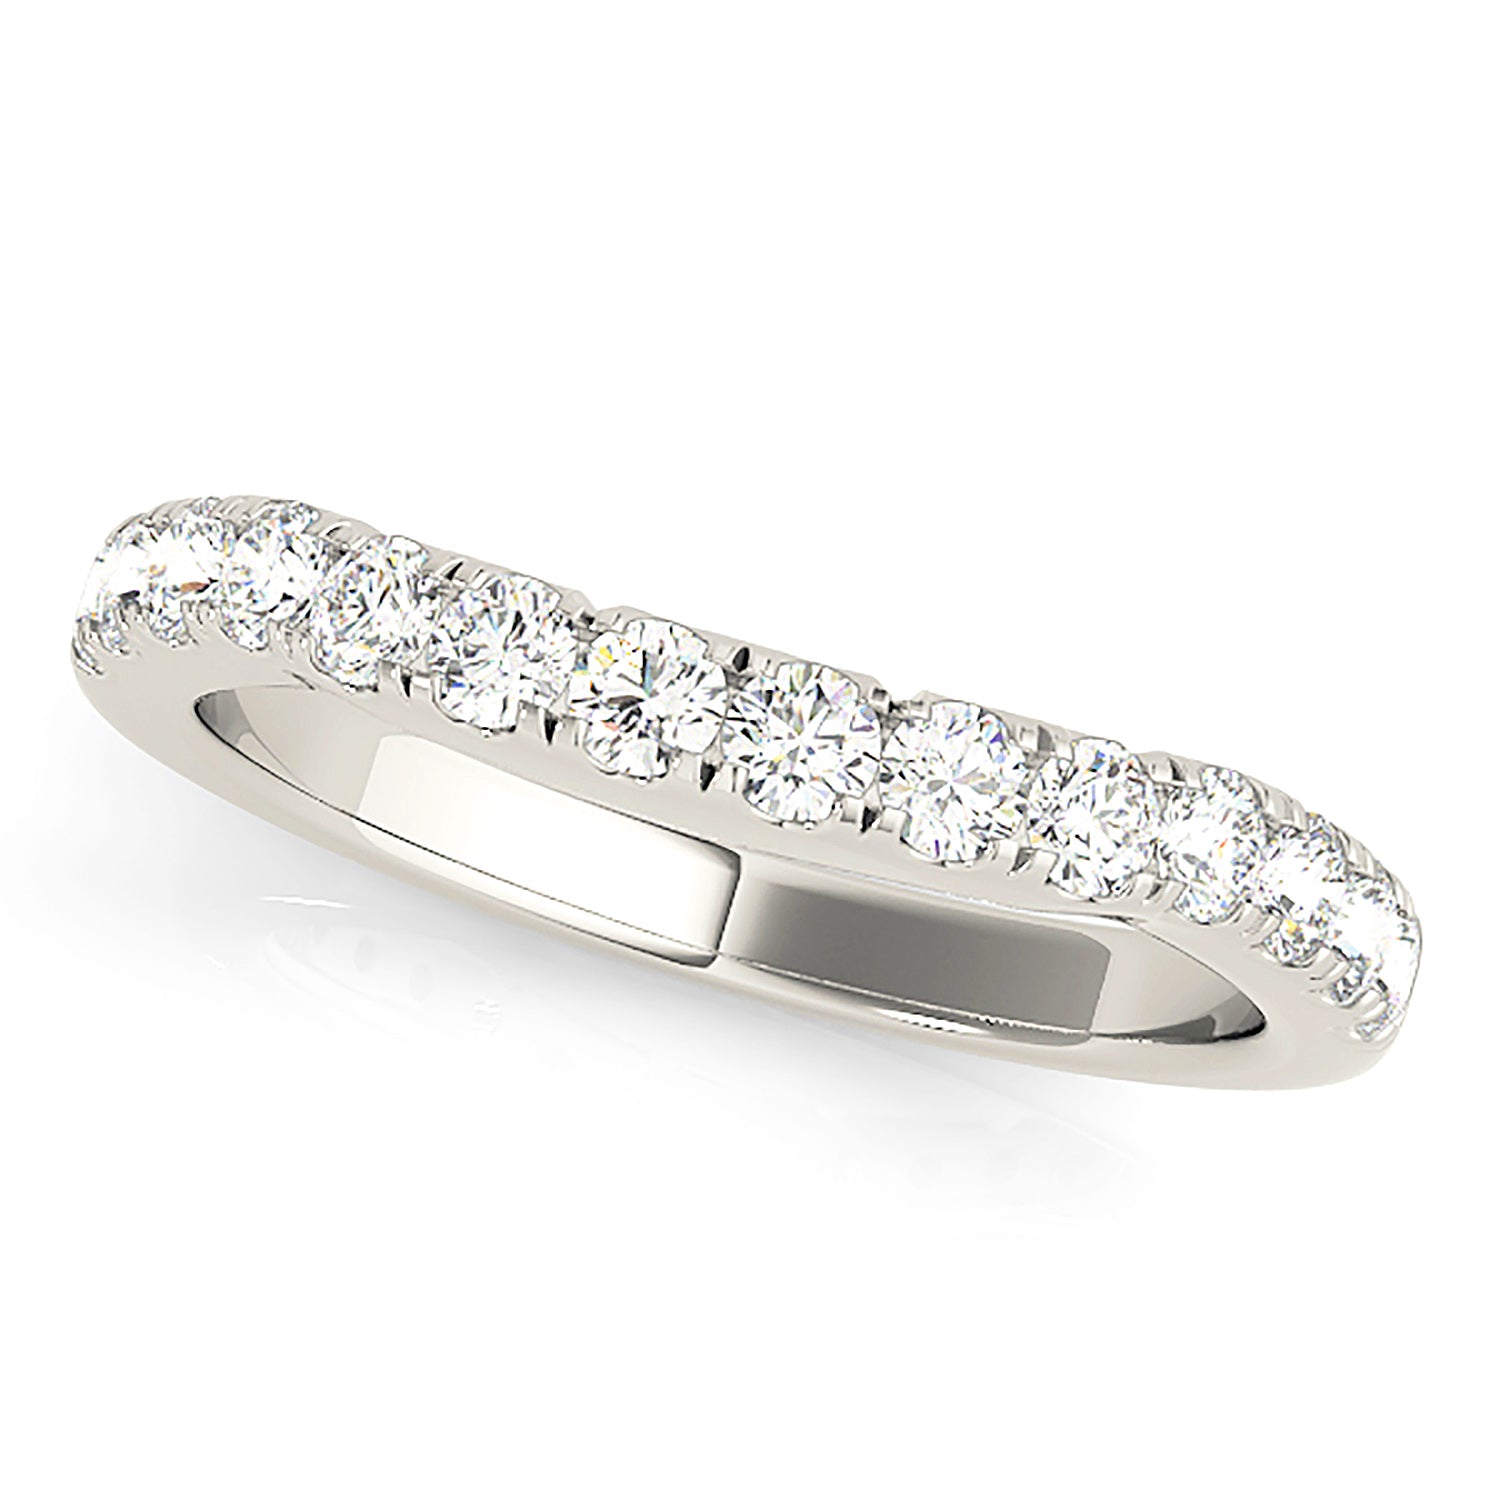 Diamond Wedding Band - 14K/18k Solid White Gold / Platinum | Curved band | Diamond Wedding Anniversary Ring | Modern Design-in 14K/18K White, Yellow, Rose Gold and Platinum - Christmas Jewelry Gift -VIRABYANI